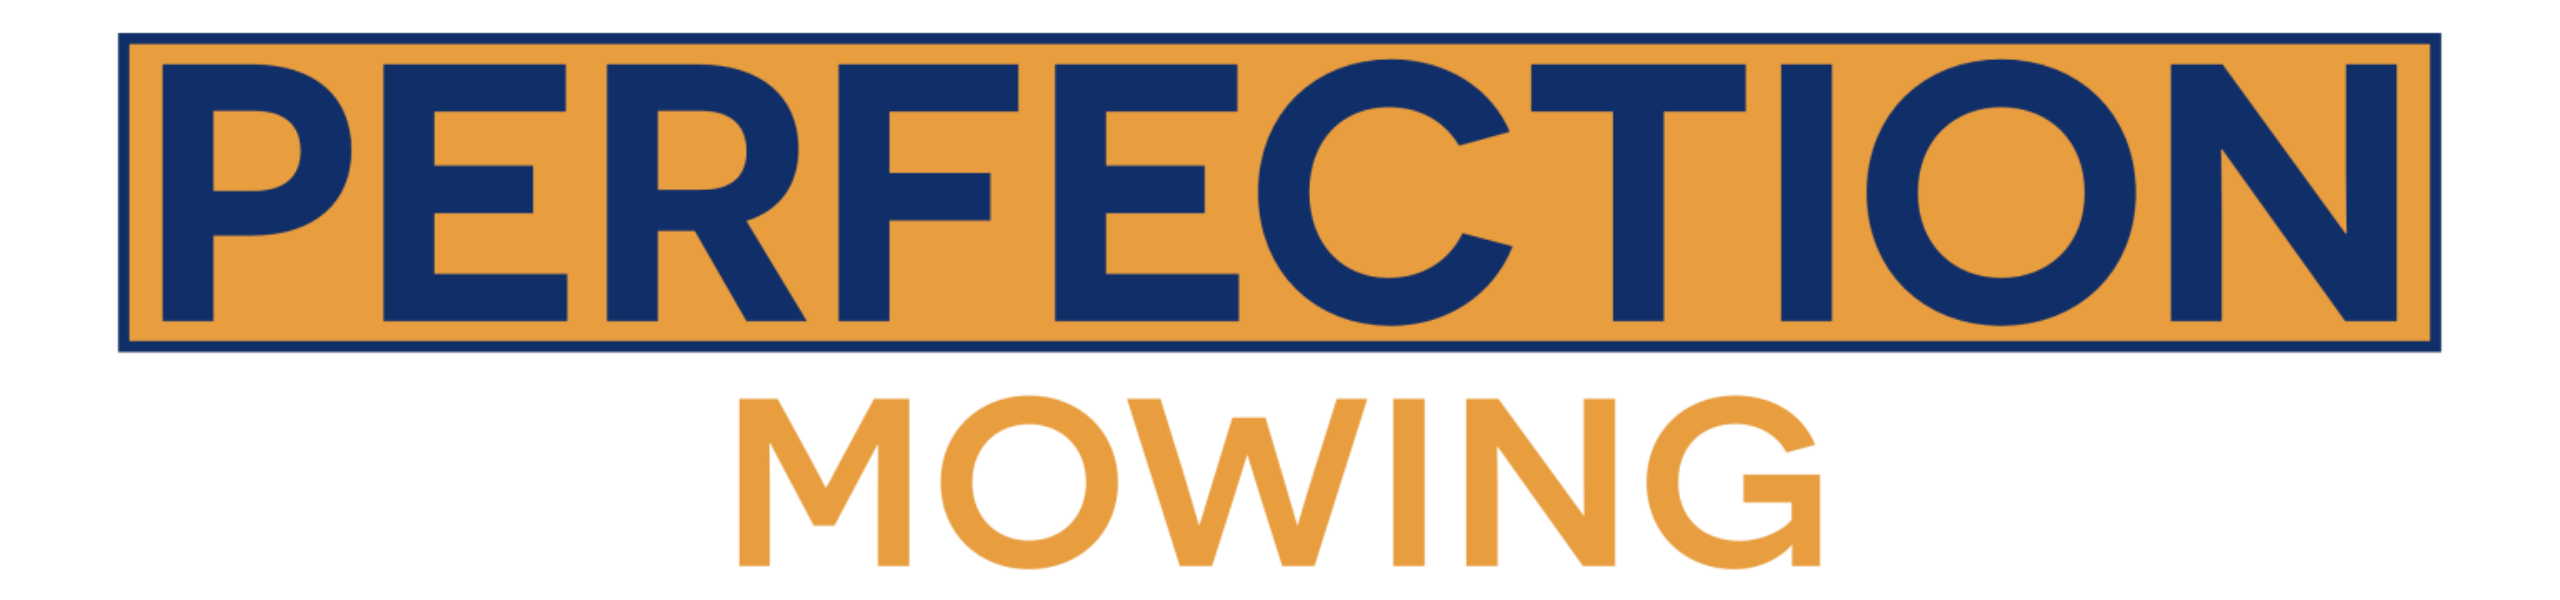 Perfection Mowing LLC Logo